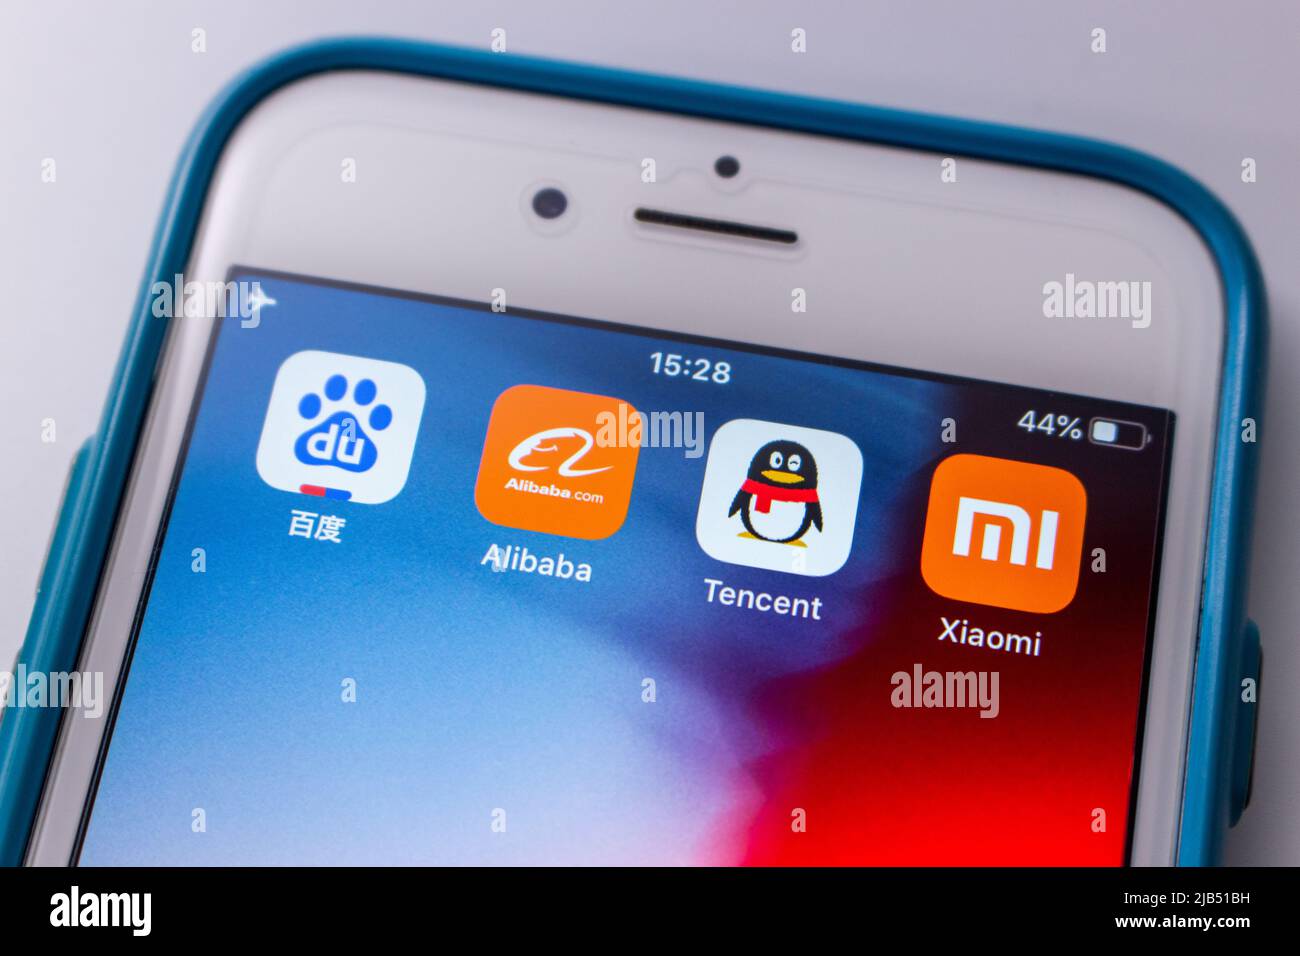 BATX, Chinese 4 big tech firms (Baidu, Alibaba, Tencent & Xiaomi) on iPhone. BATX is counter-standing by GAFA (Google, Amazon, Facebook & Apple) in US Stock Photo